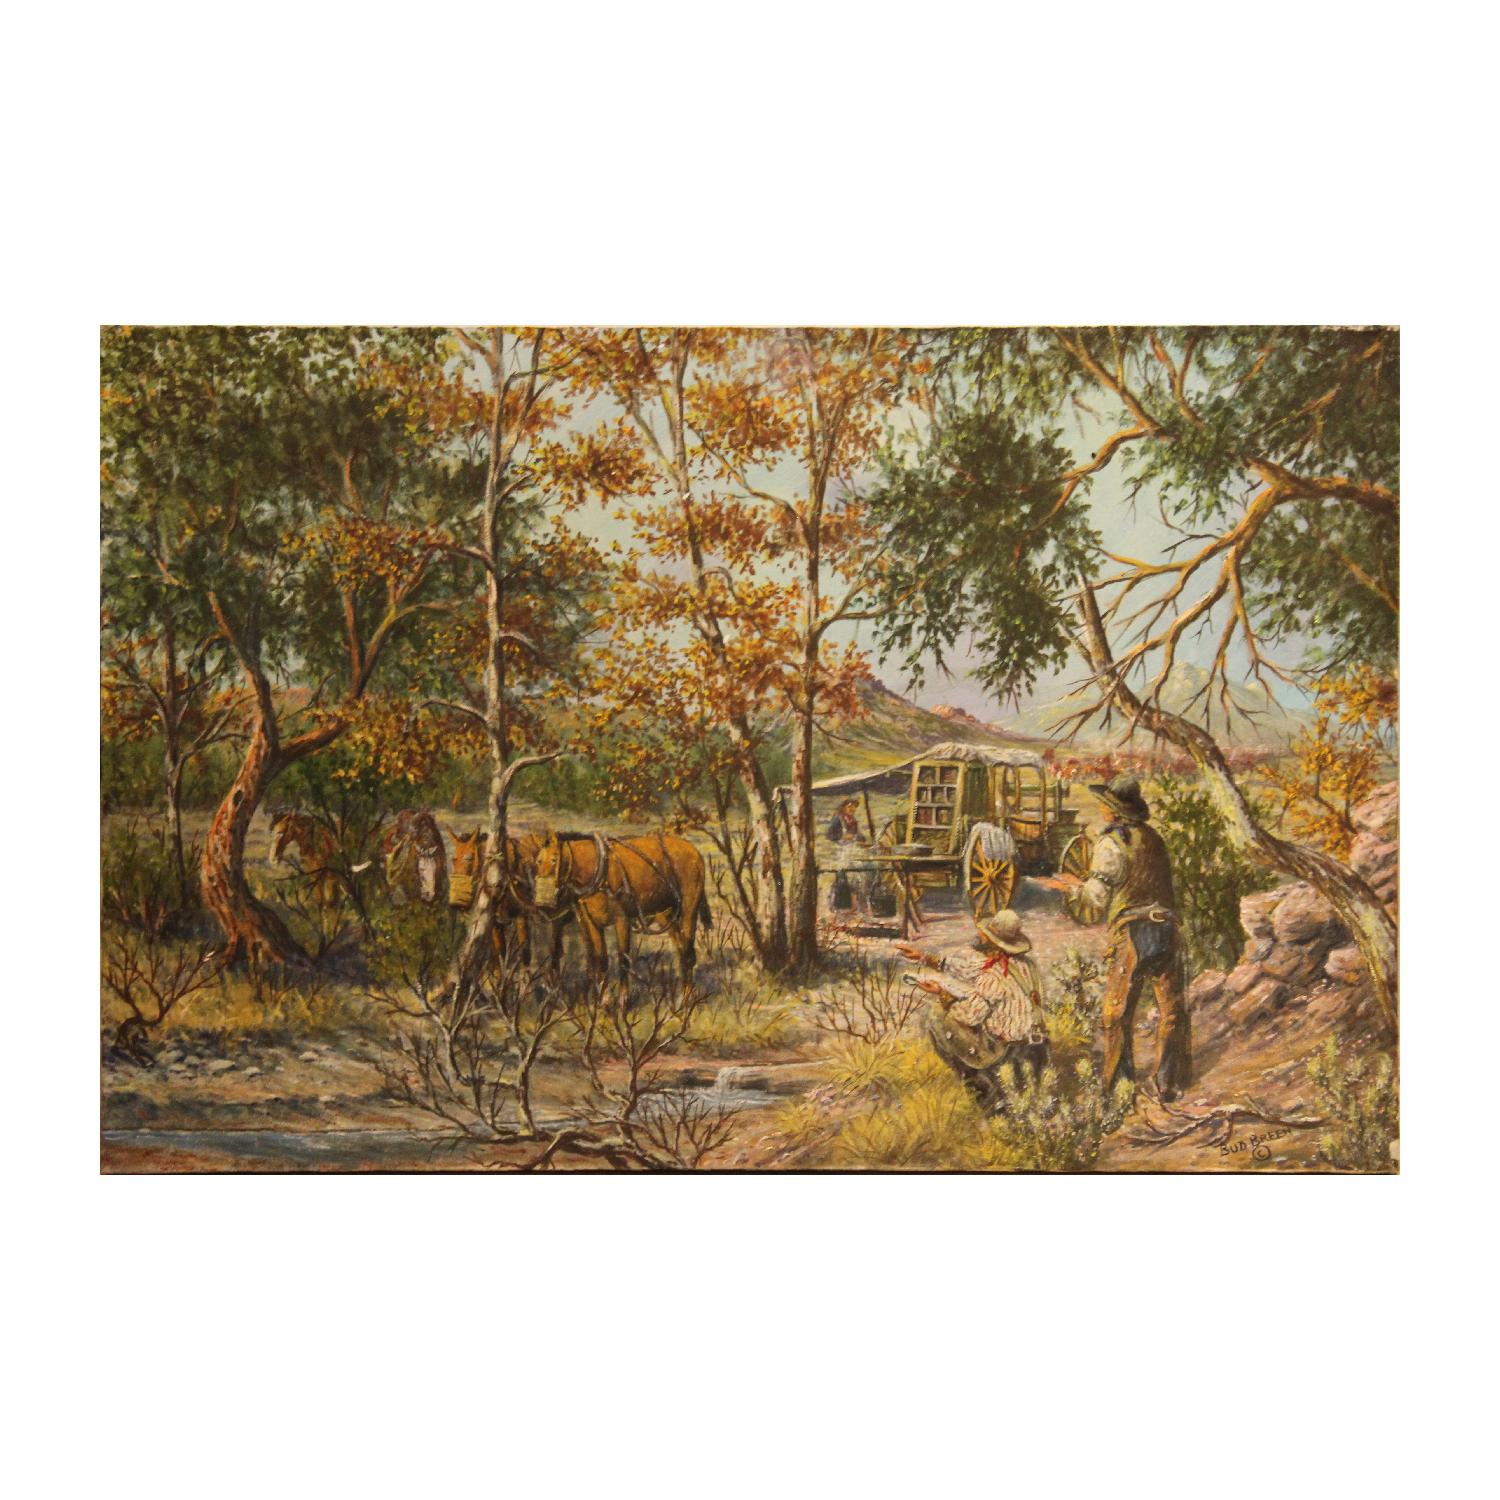 Bud Breen Landscape Painting - "Plans for the Trail" Romanticized Naturalistic Western Landscape